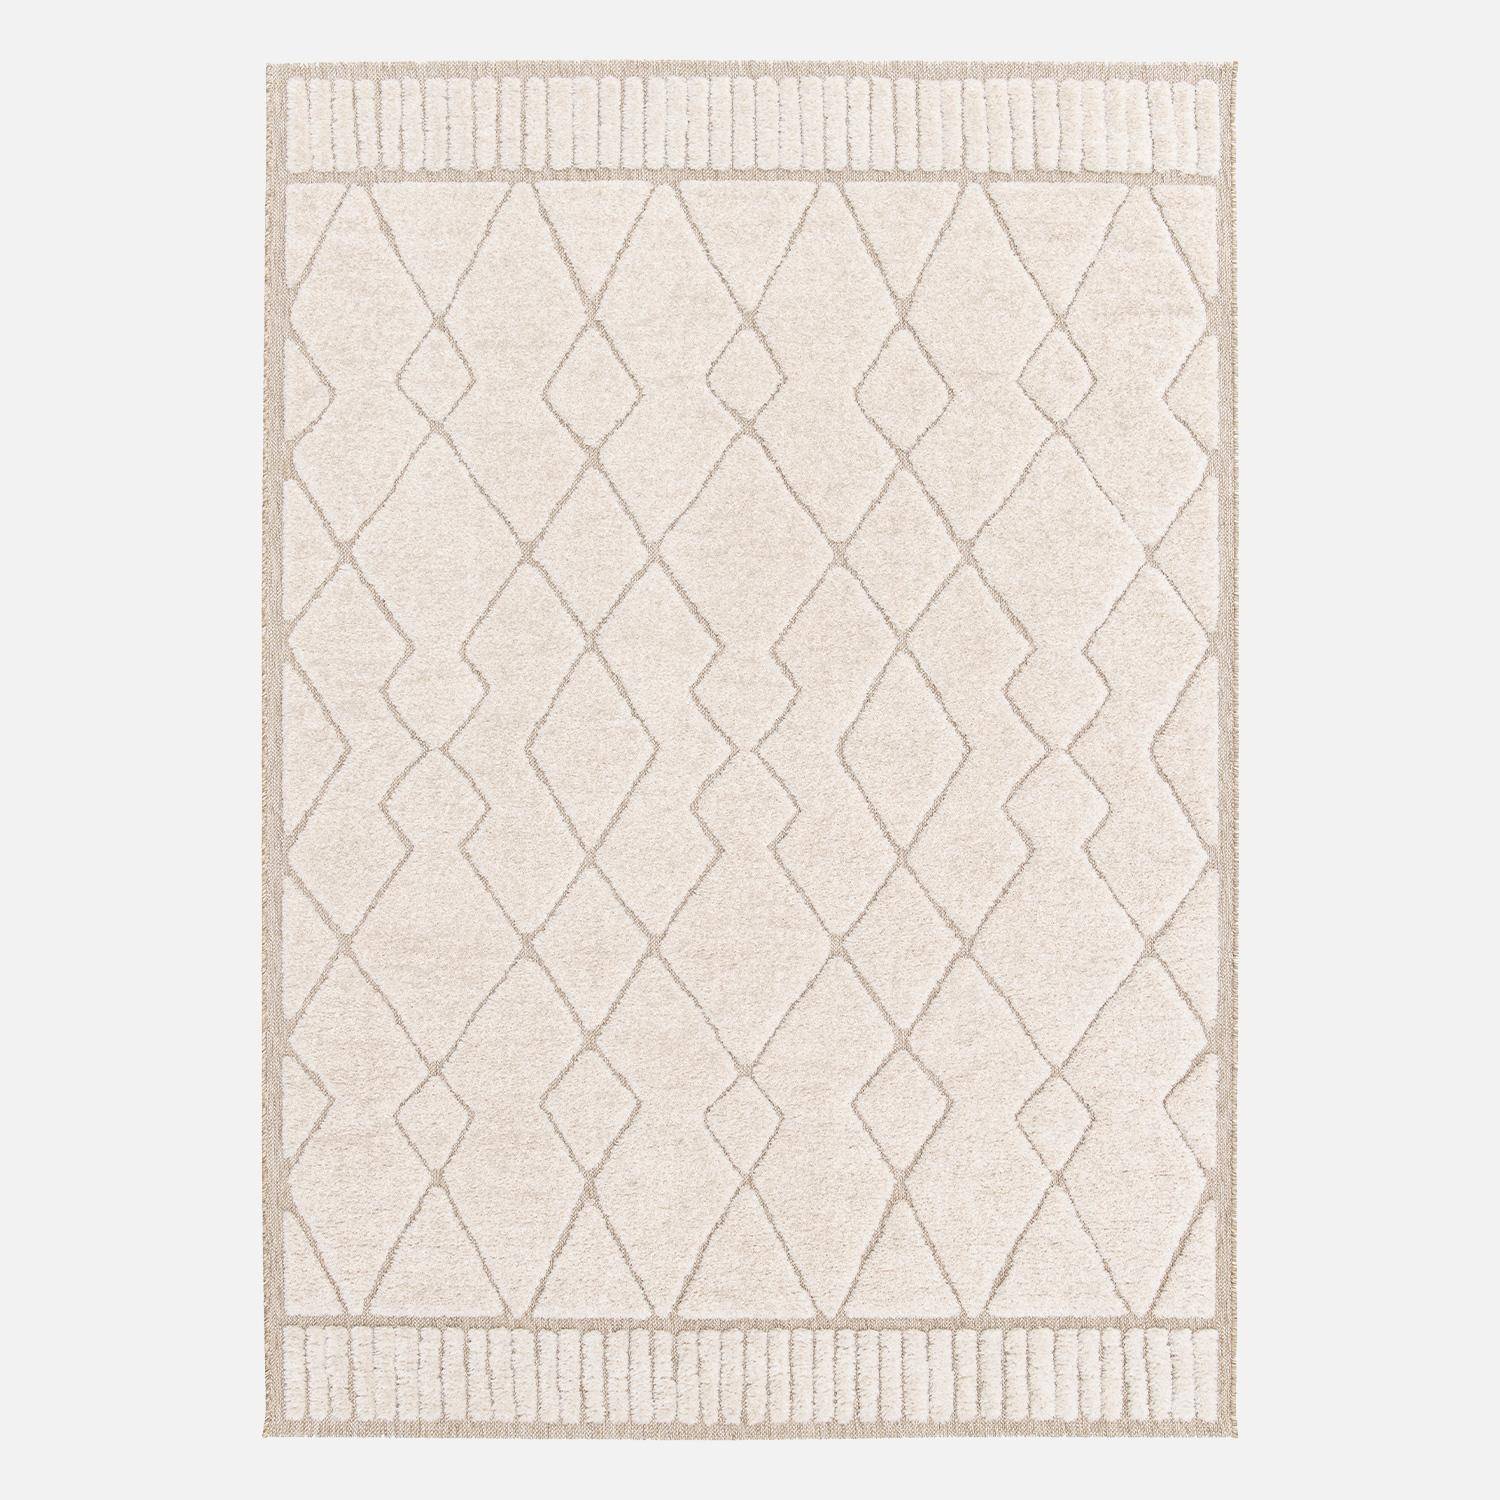 Interior carpet with Berber pattern, beige and cream, Judy, 160 x 230 cm Photo1